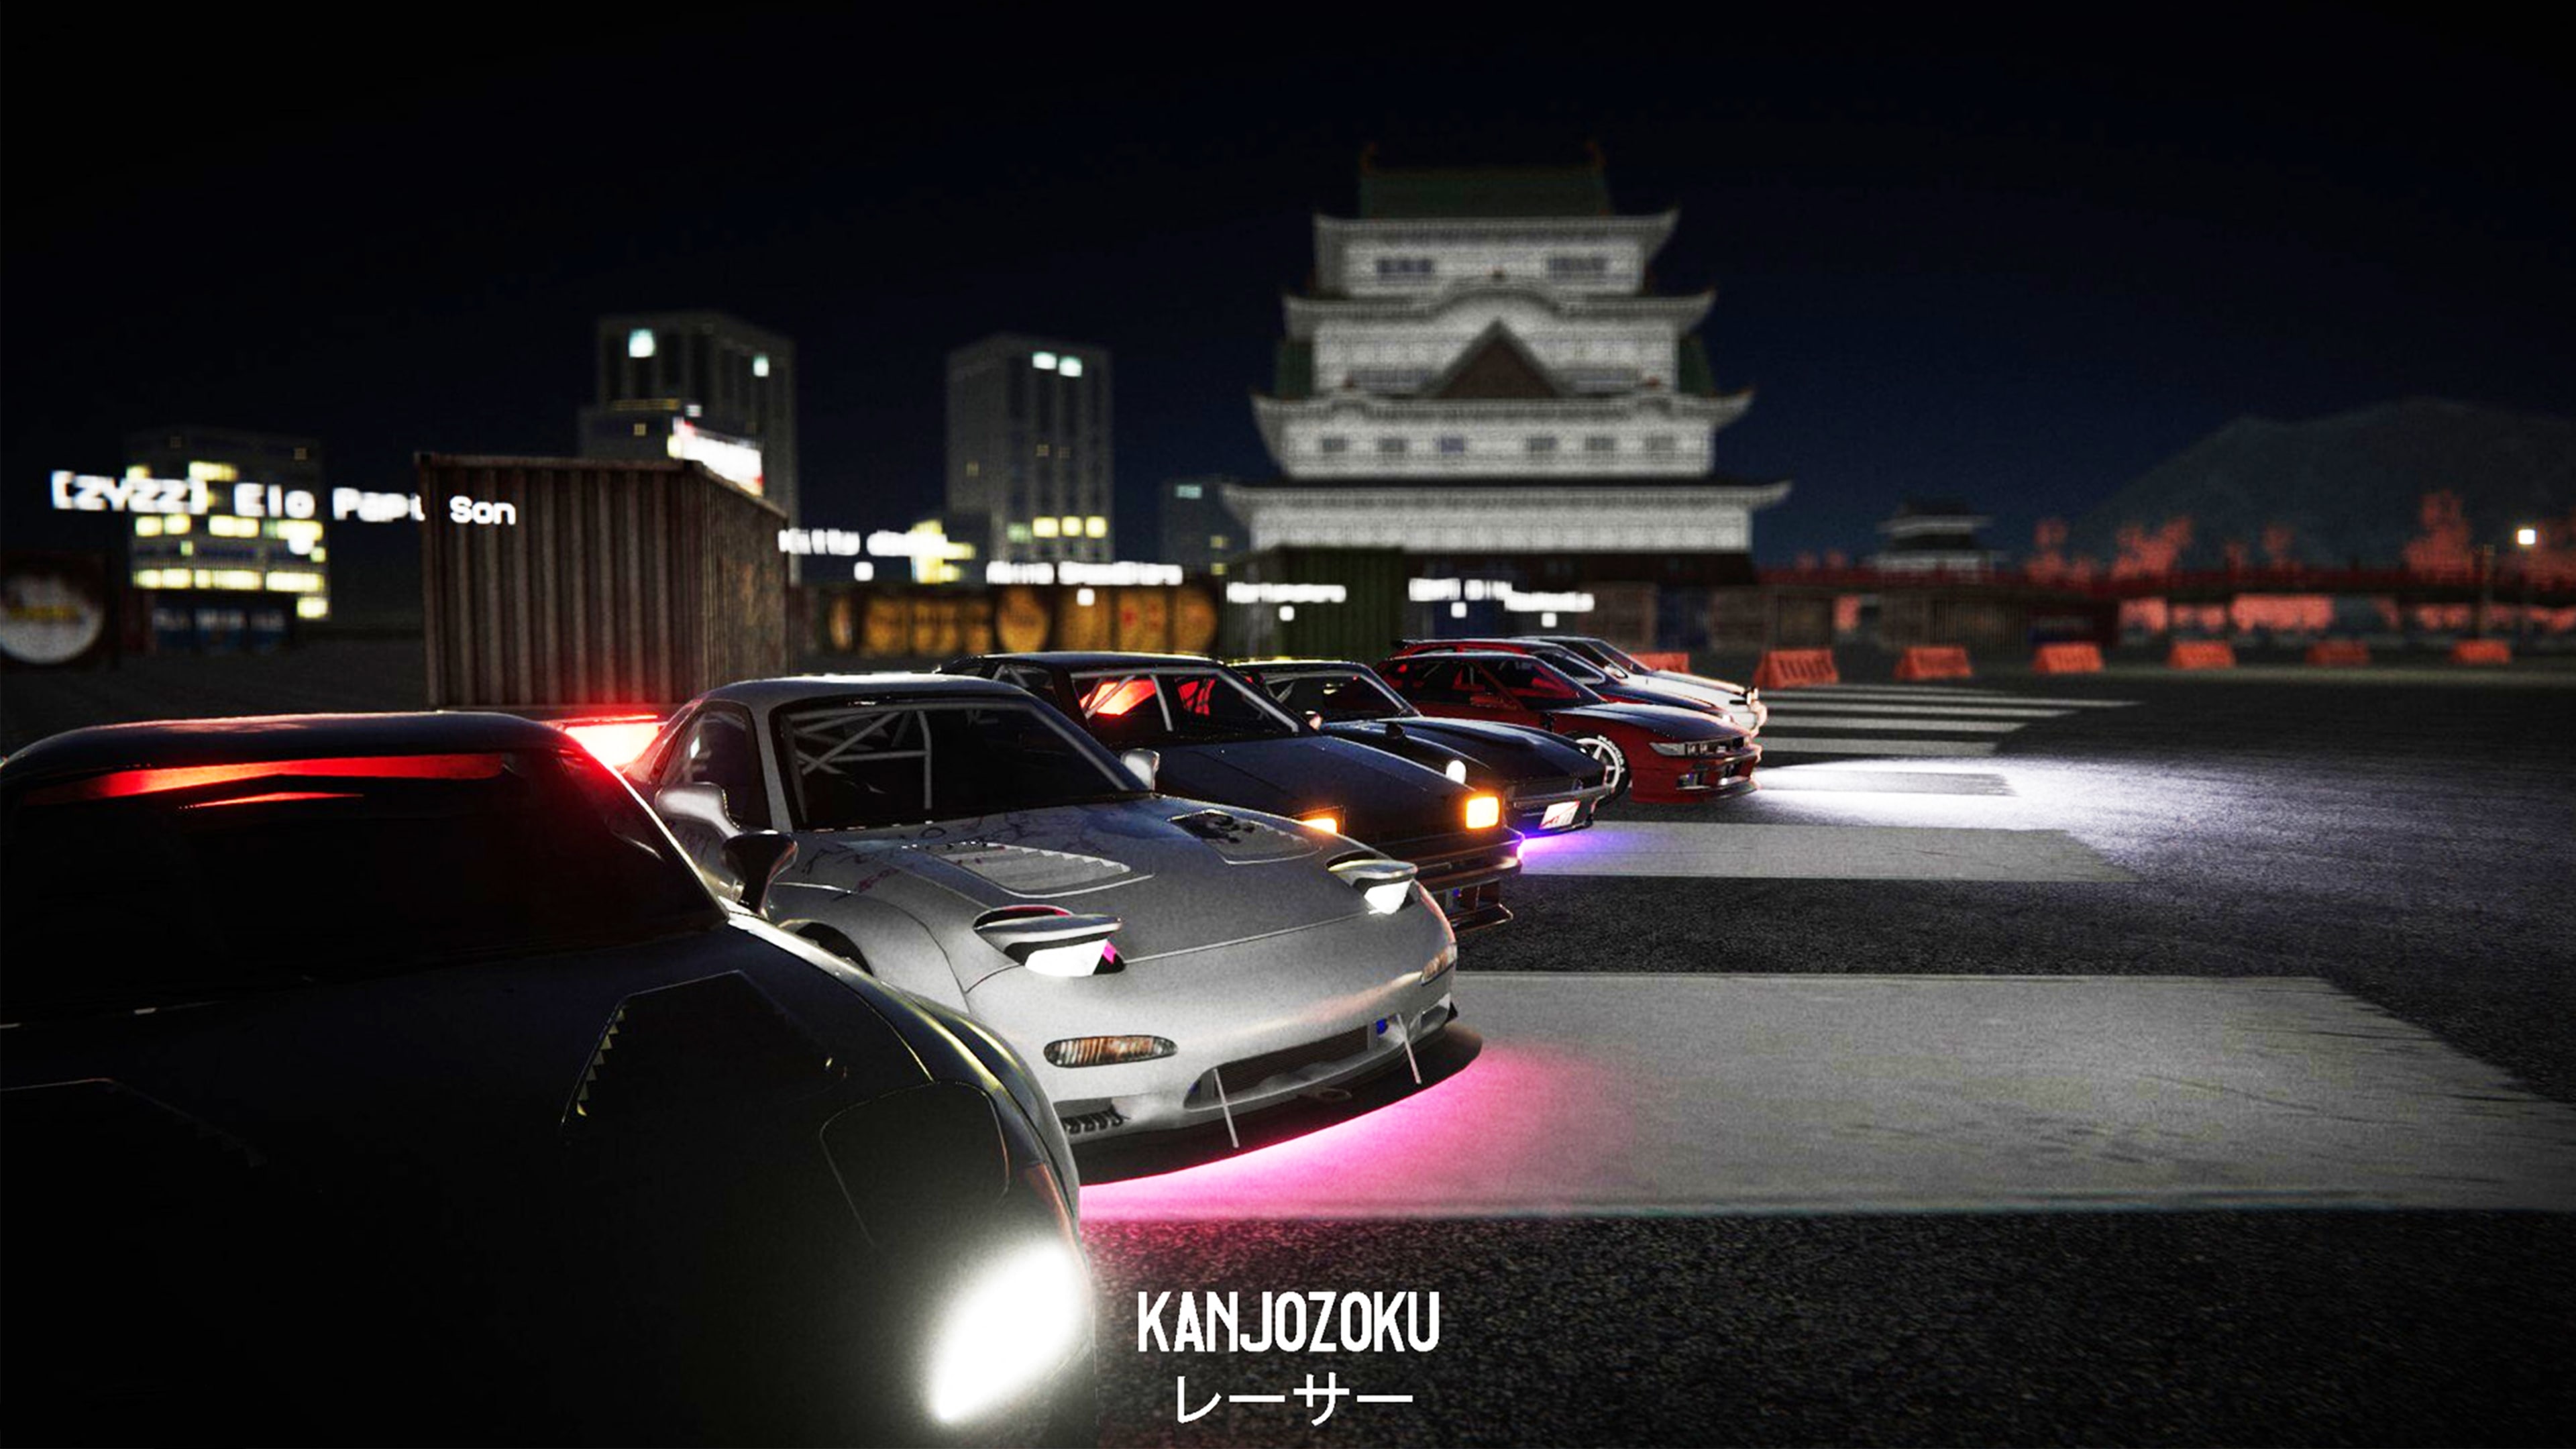 Kanjozoku Game レーサー — Car Racing & Highway Driving Simulator Games on PS4 —  price history, screenshots, discounts • USA